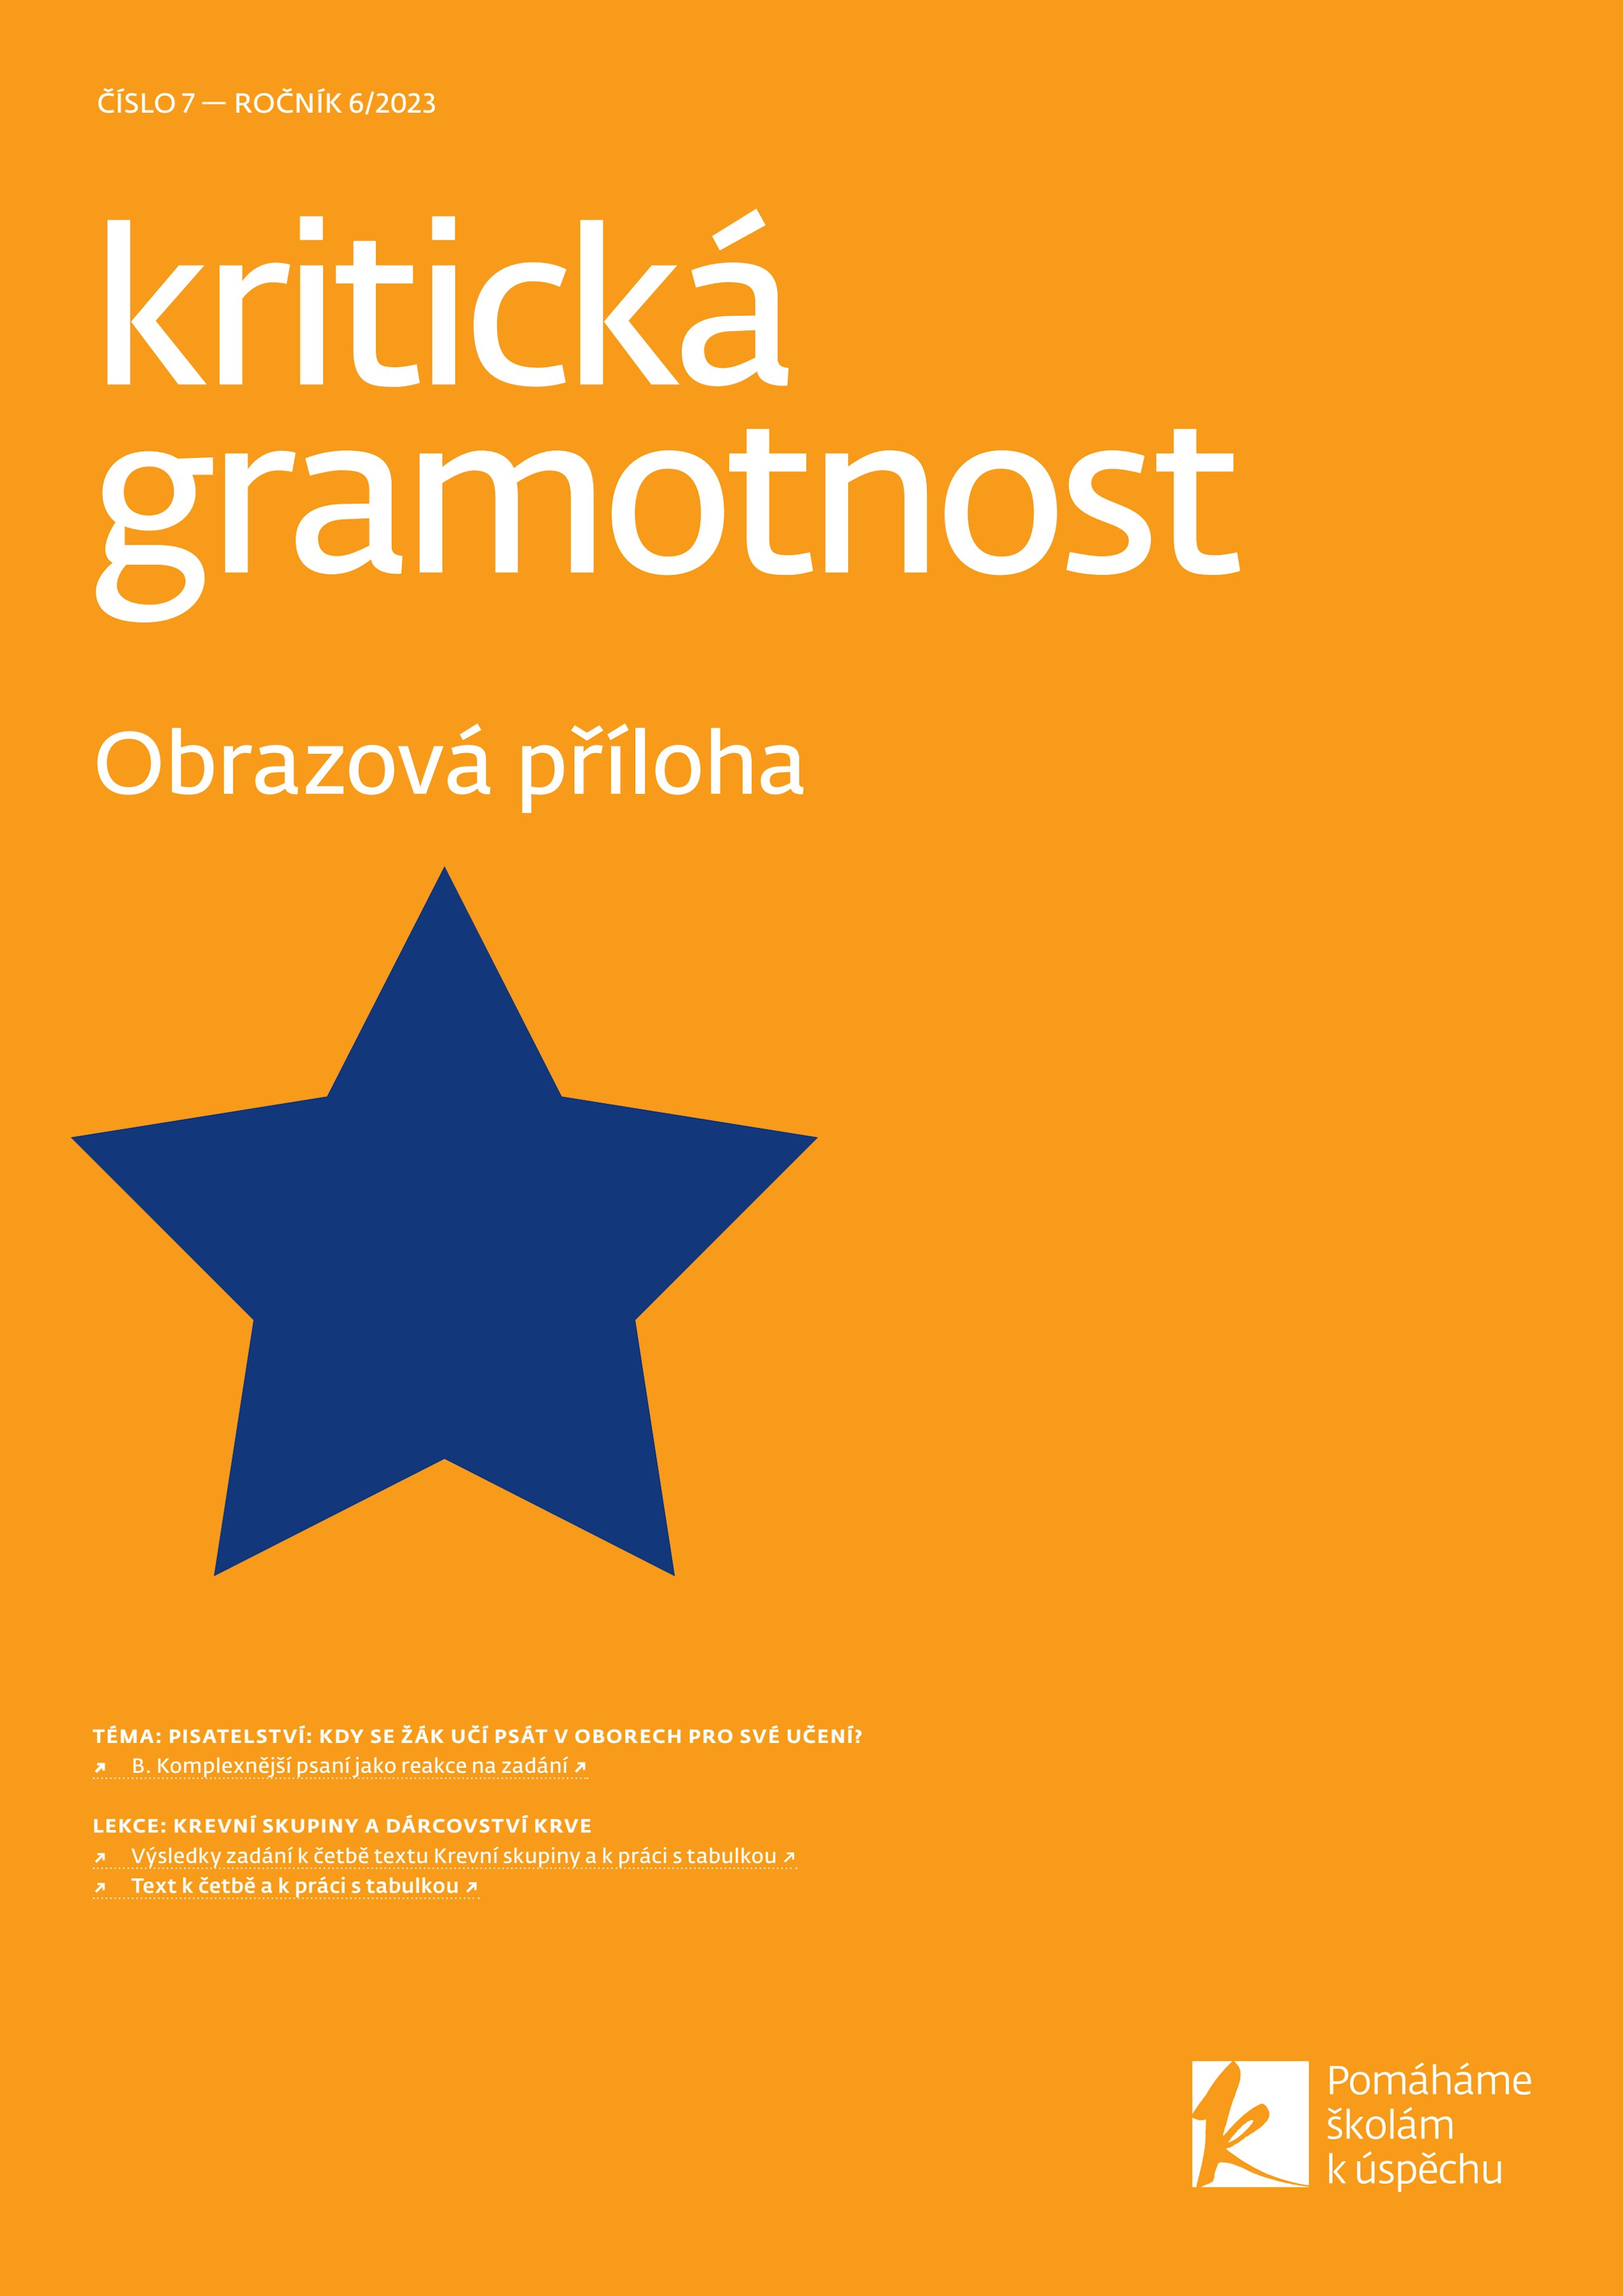 kriticka-gramotnost-7-priloha.pdf